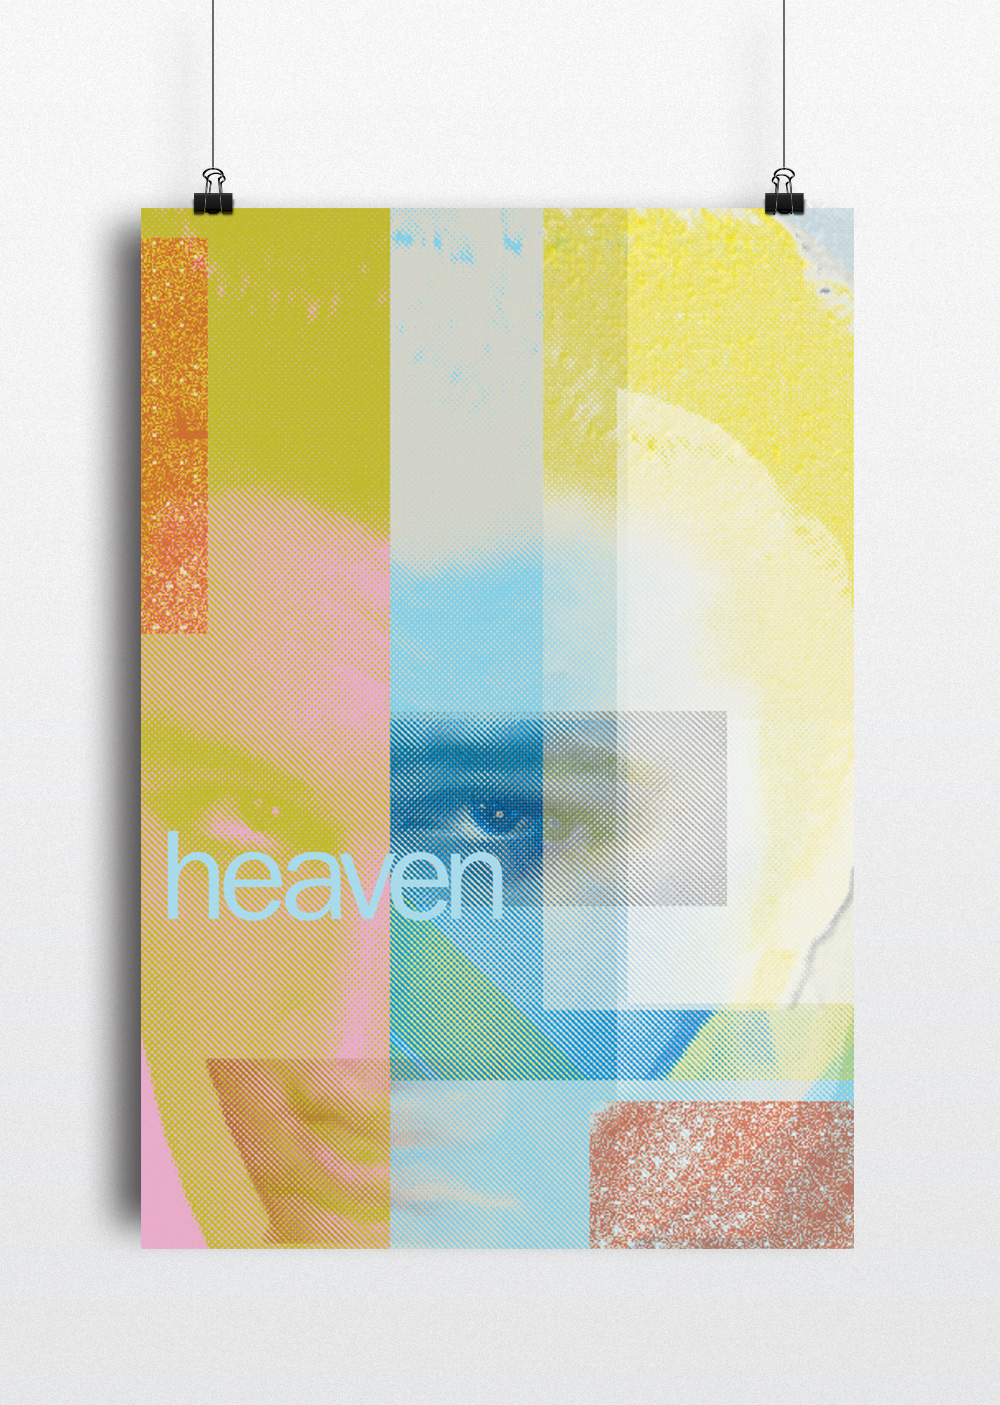 elvis elvis presley dead heaven hell alive Terry Koppel poster Poster Design